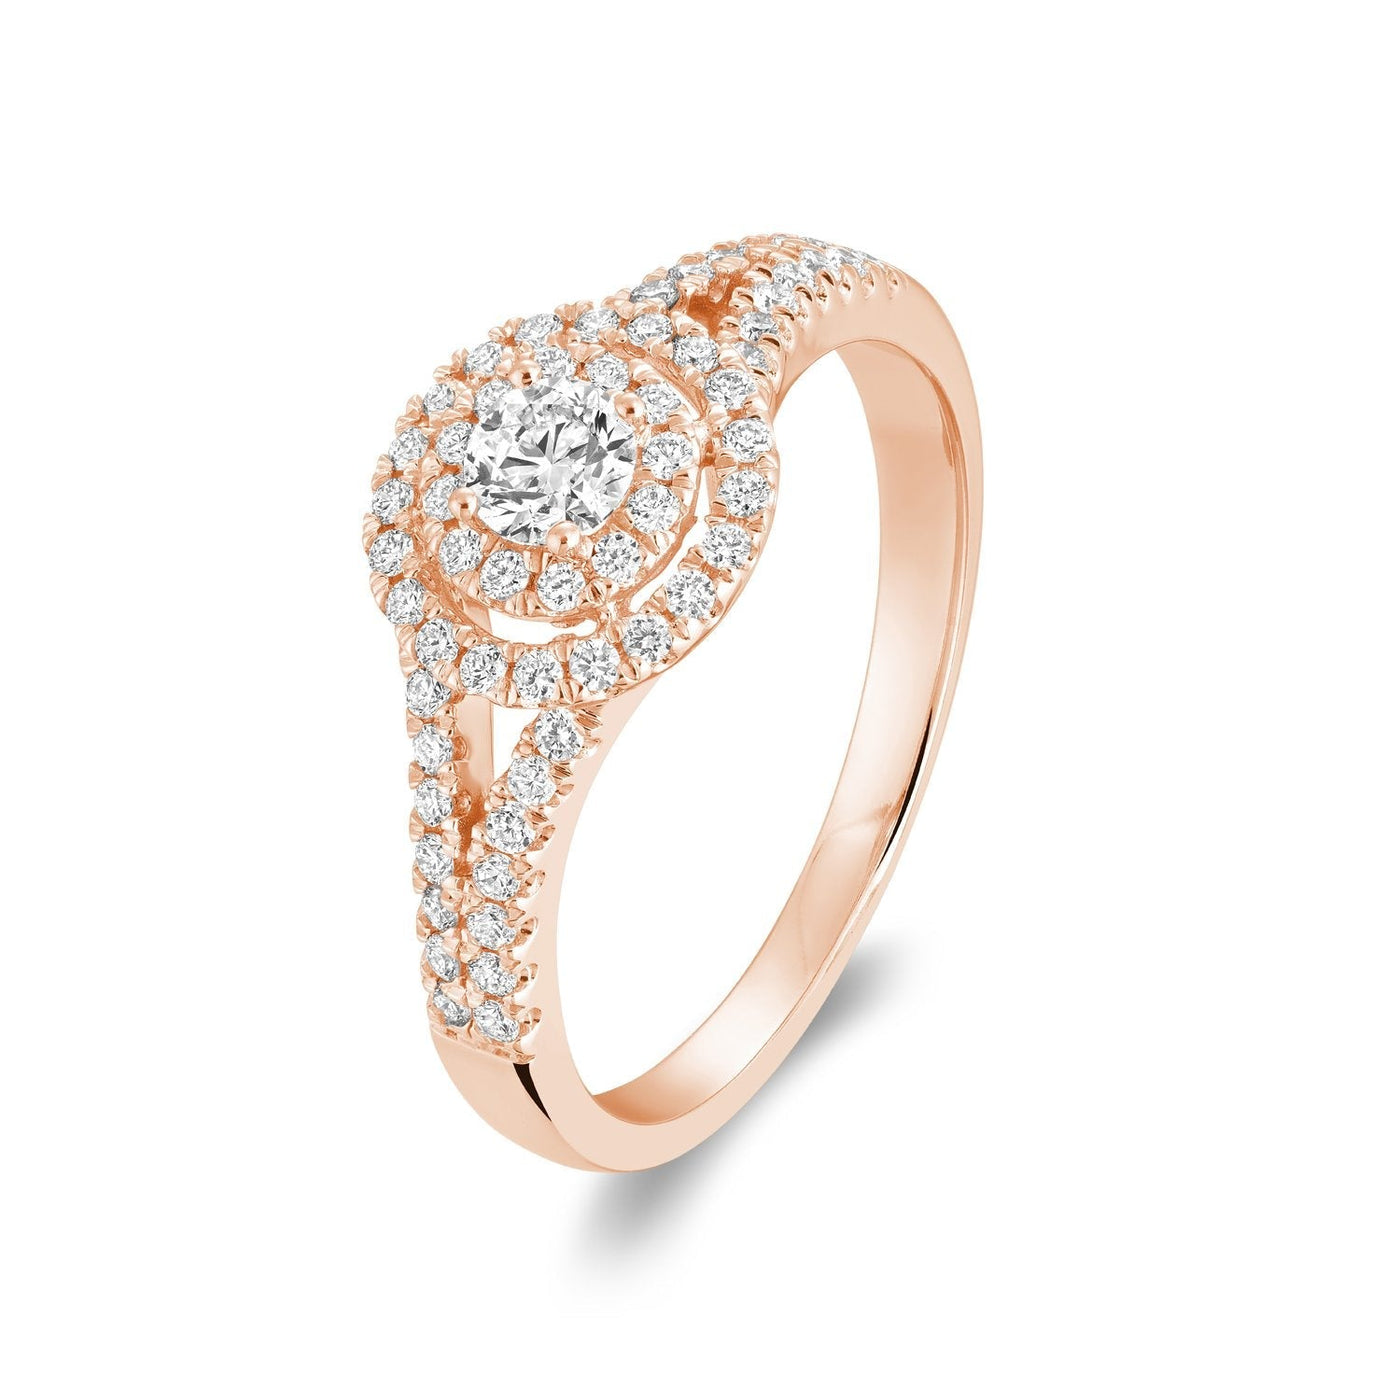 Double Halo Diamond Engagement Ring